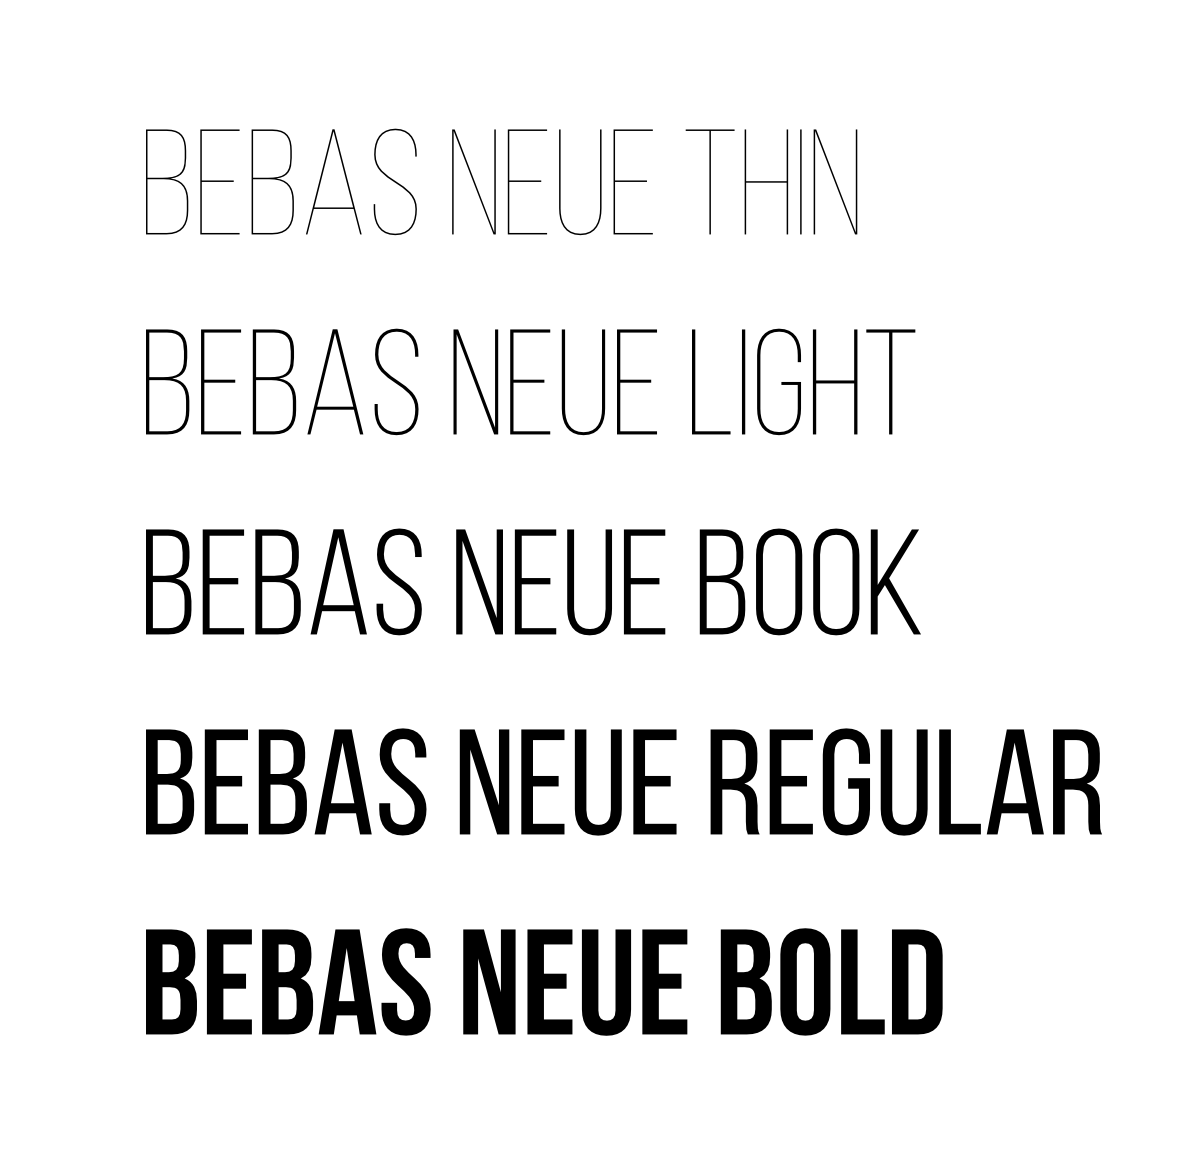 download bebas neue font for photoshop